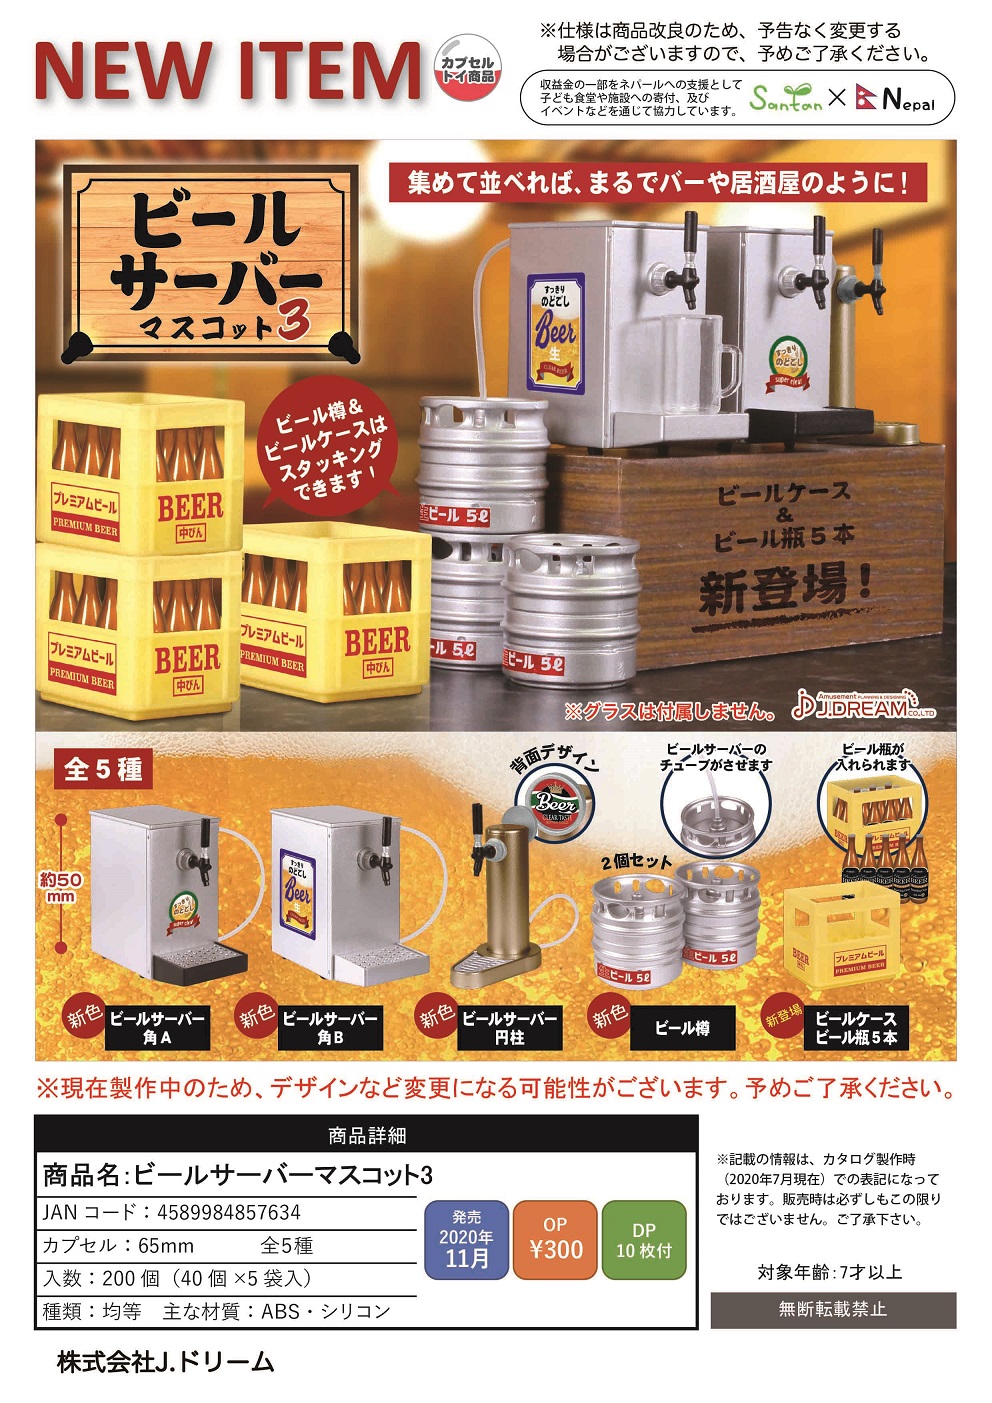 【B】300日元扭蛋 场景摆件 啤酒自助桶 第3弹 全种 (1袋40个) 857634